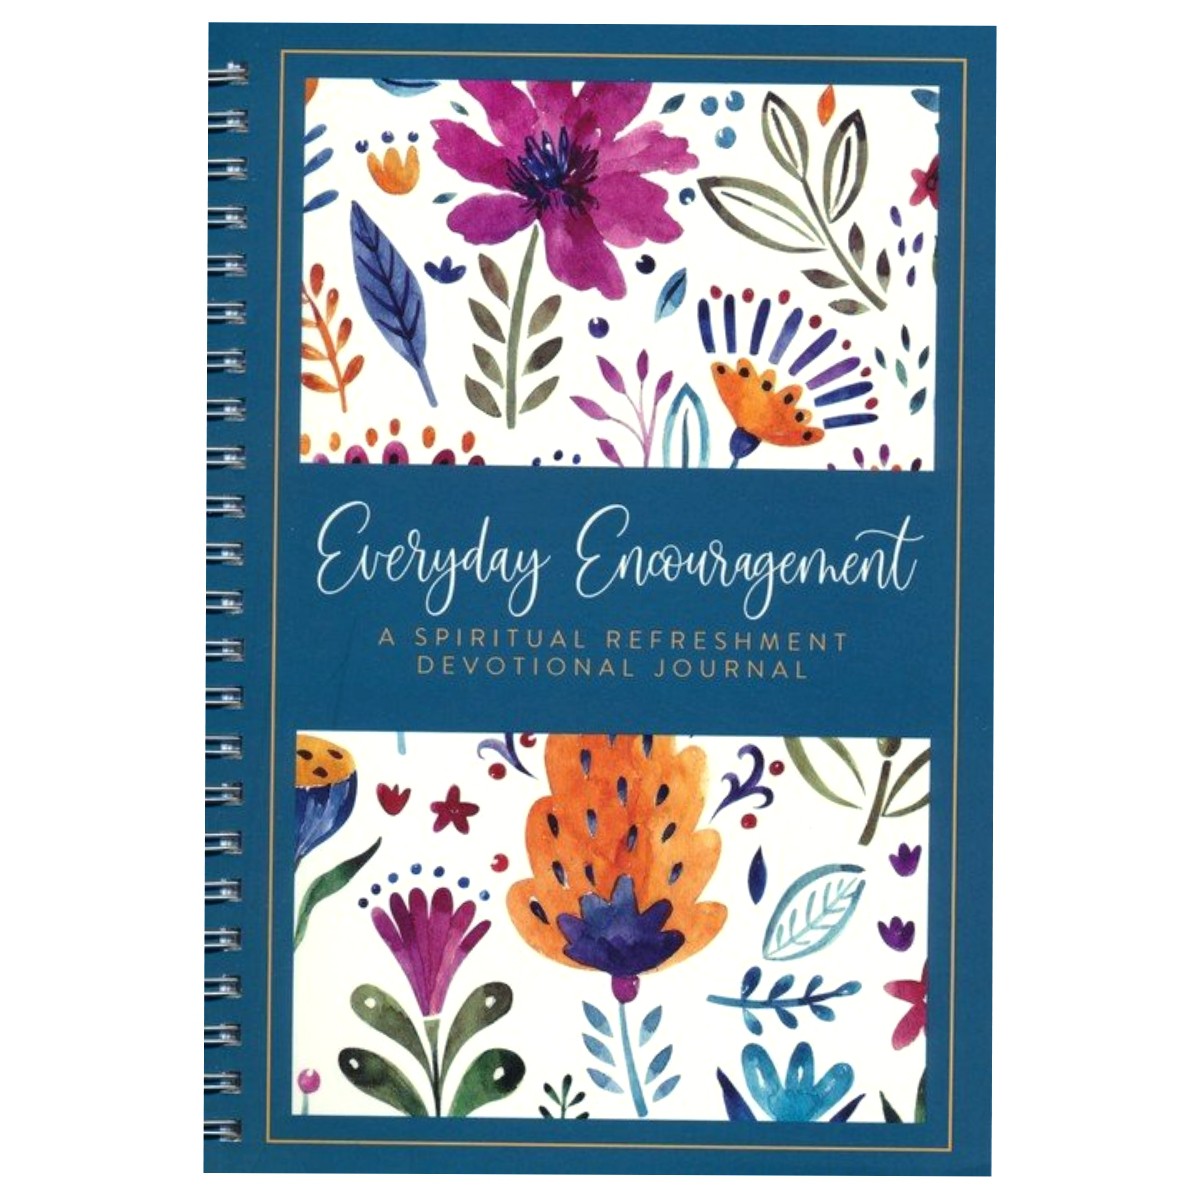 For Her. Everyday Encouragement: A Spiritual Refreshment Devotional Journal